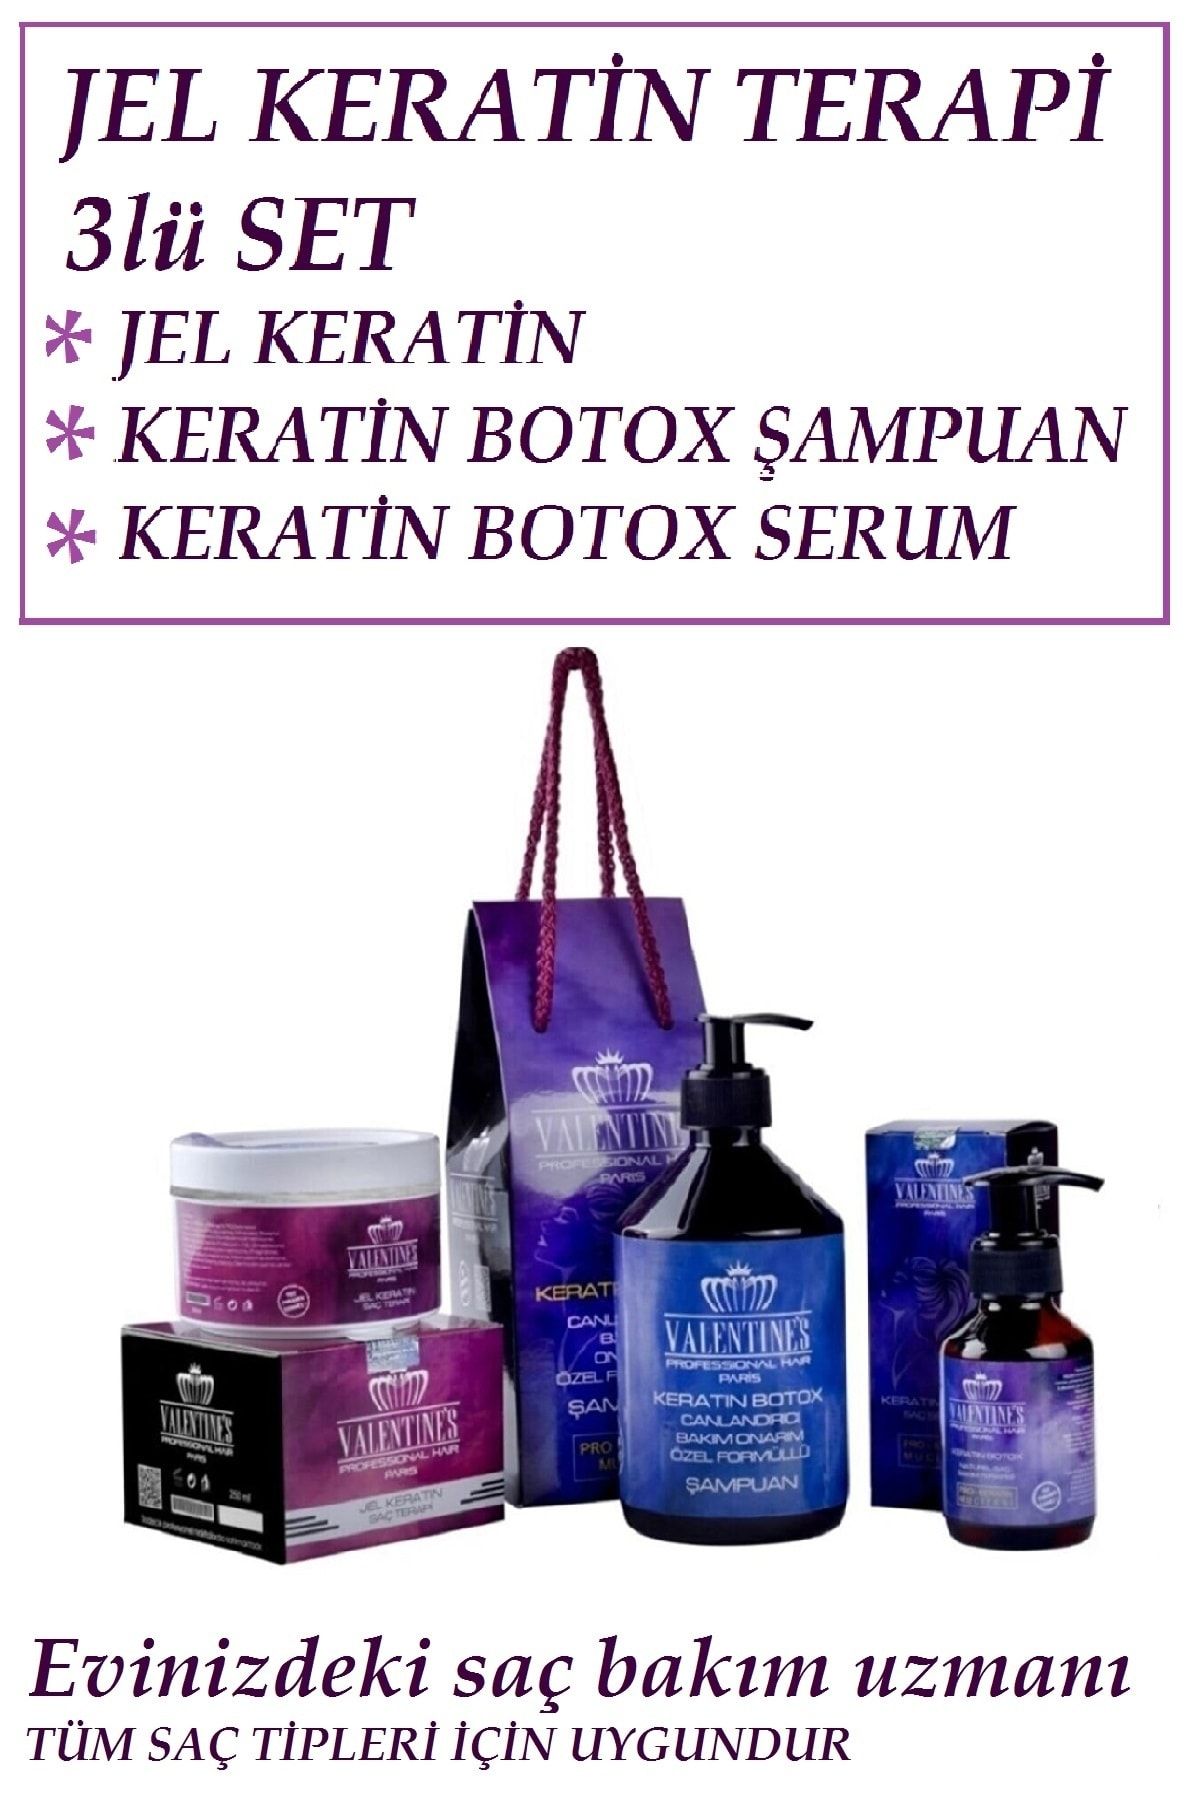 VALENTINES PROFESSIONAL Jel Keratin Terapi / Keratin Botox Şampuan / Keratin Botox Serum 3lü Set